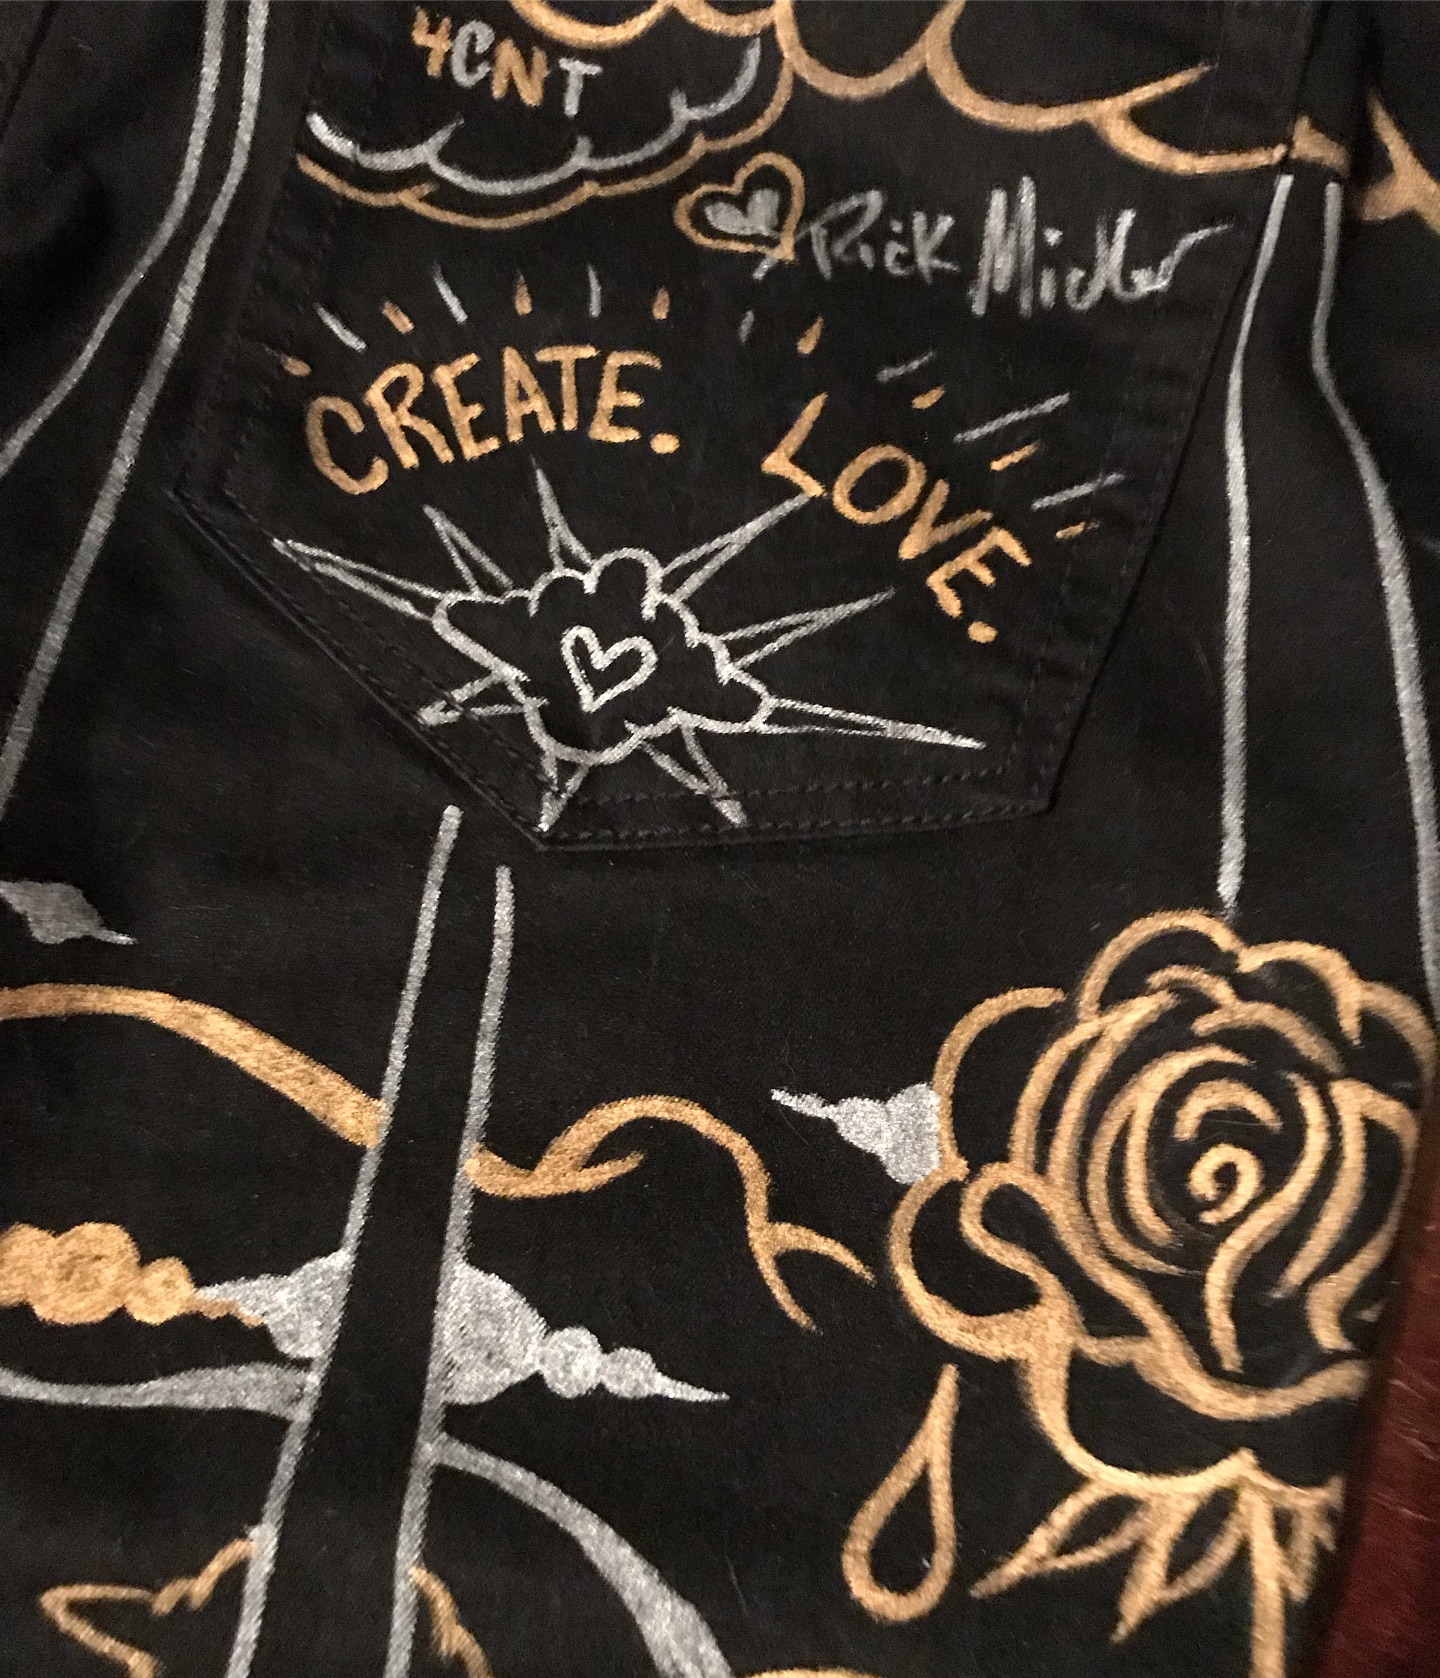 Rick pants 3 -- create love